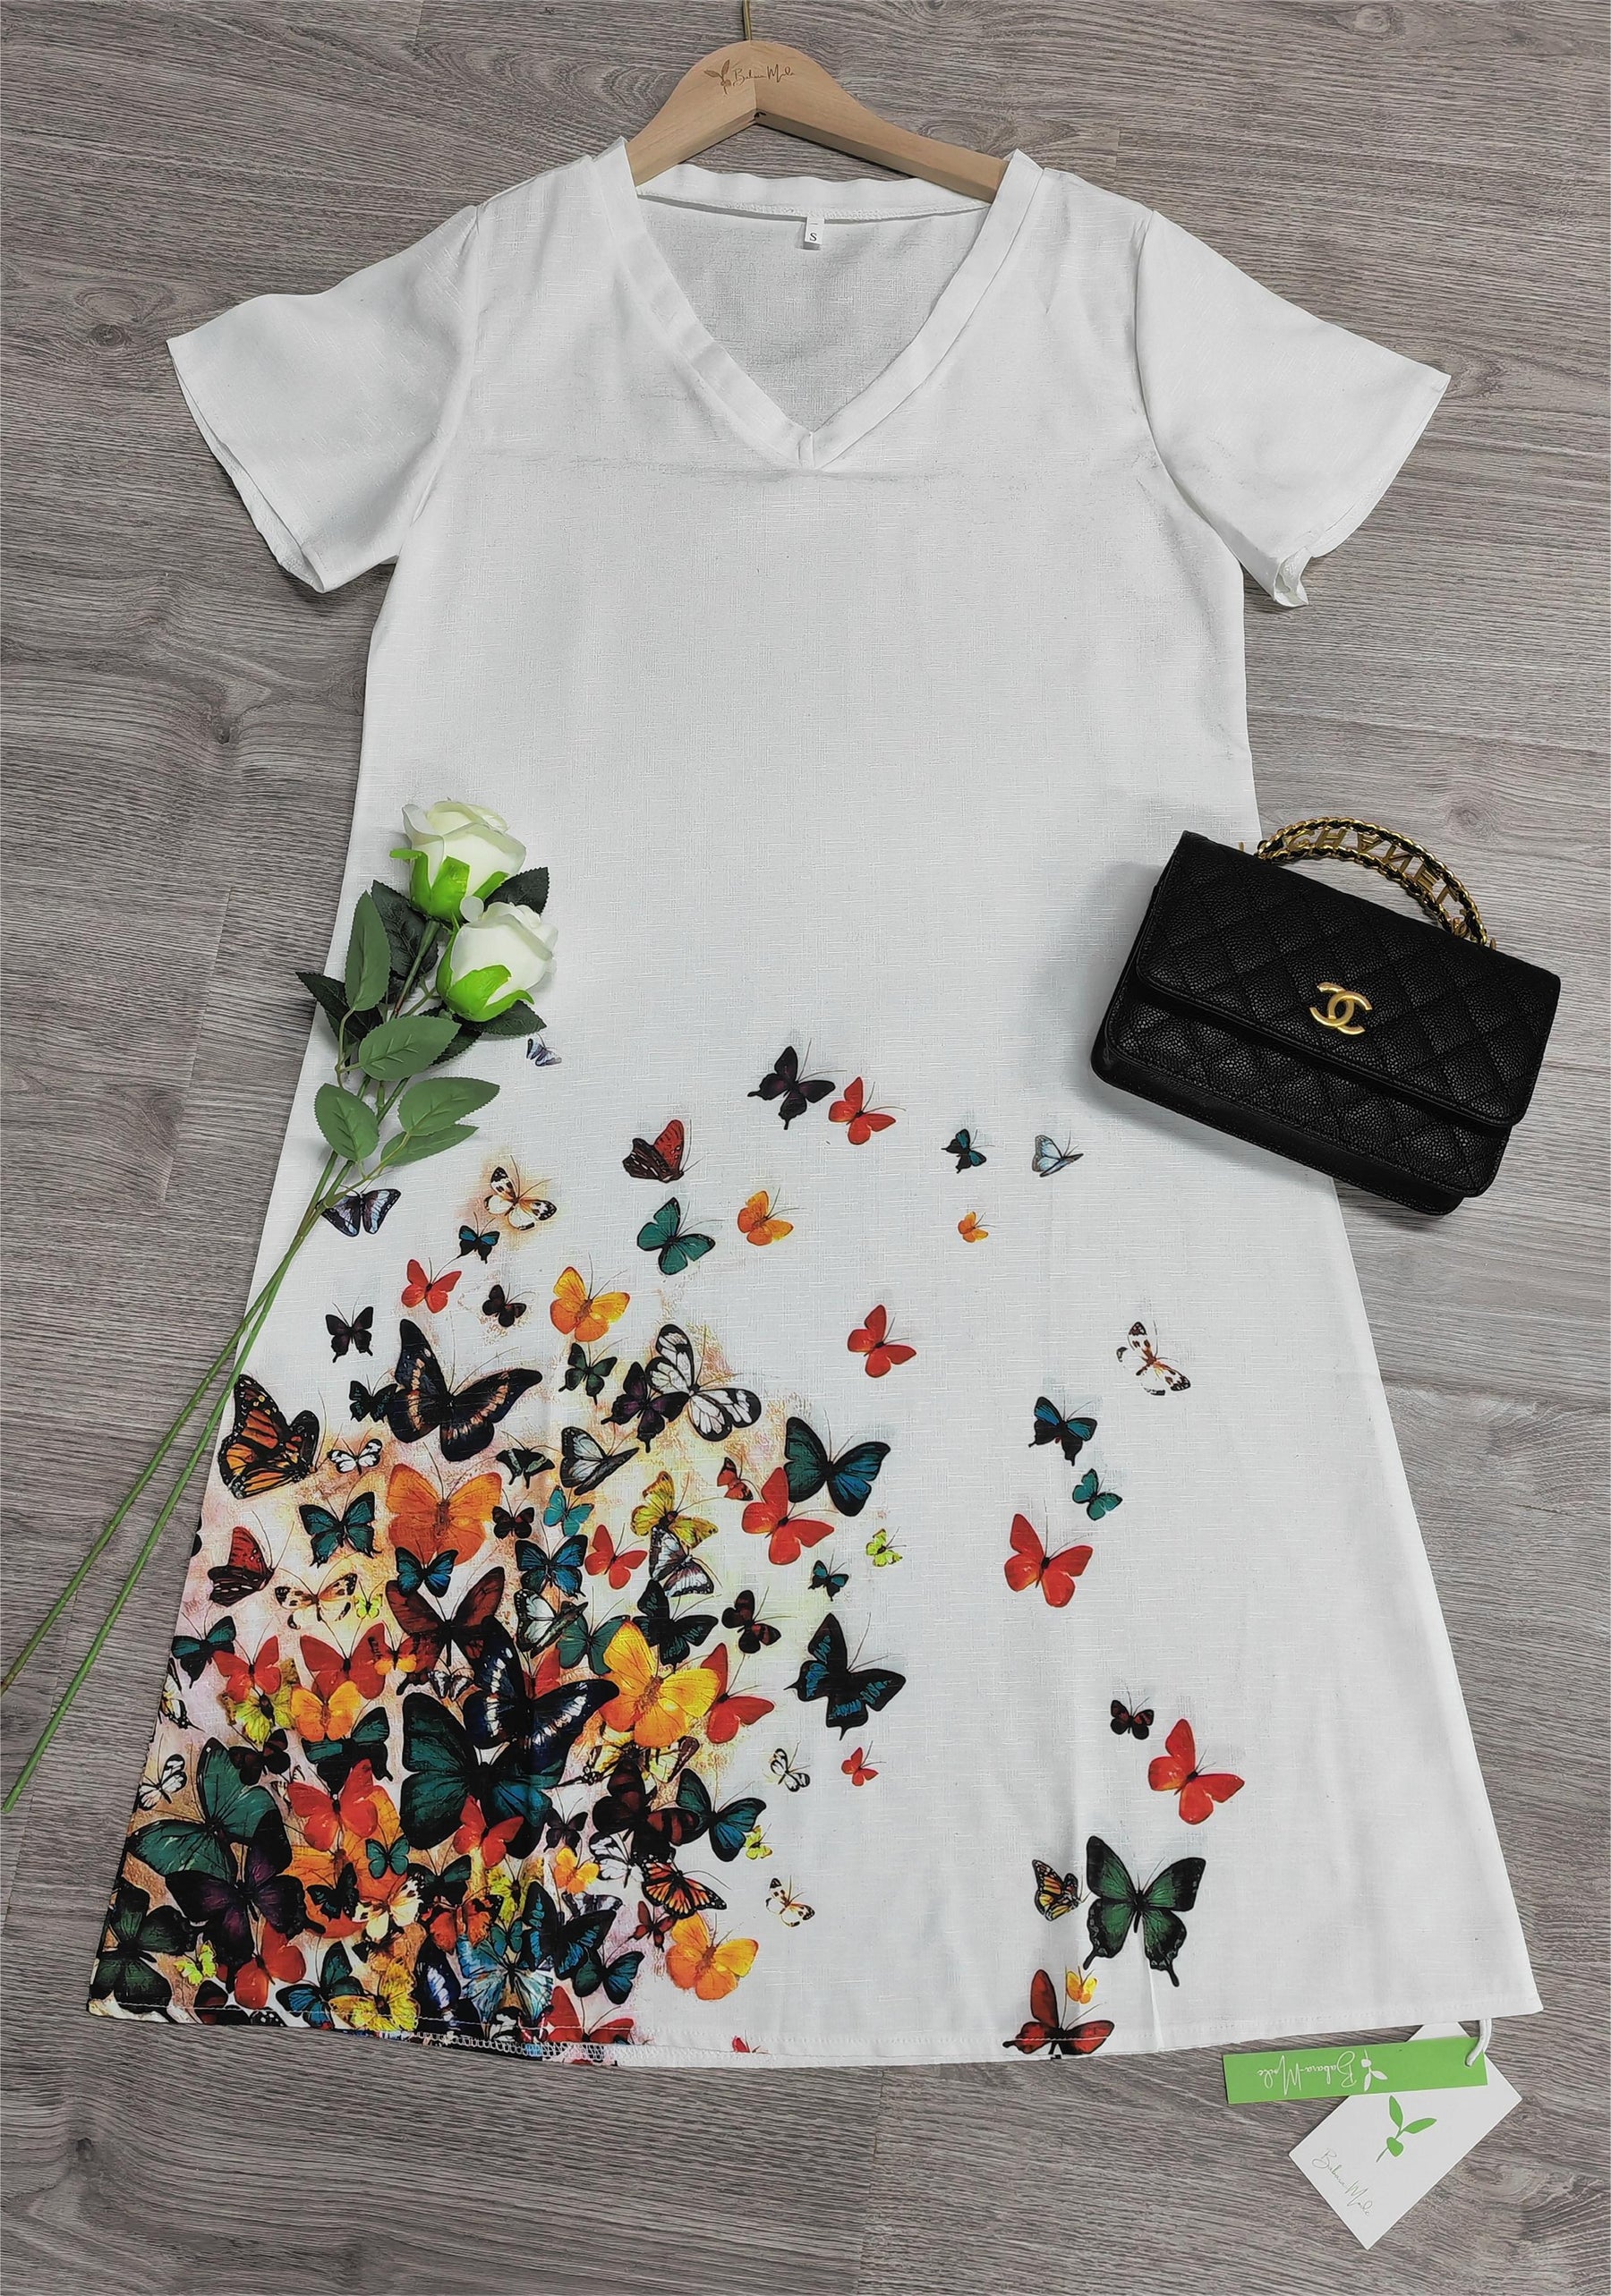 BioBlüte® - Butterfly Dream Bezauberndes Kleid mit Schmetterlingsmotiv